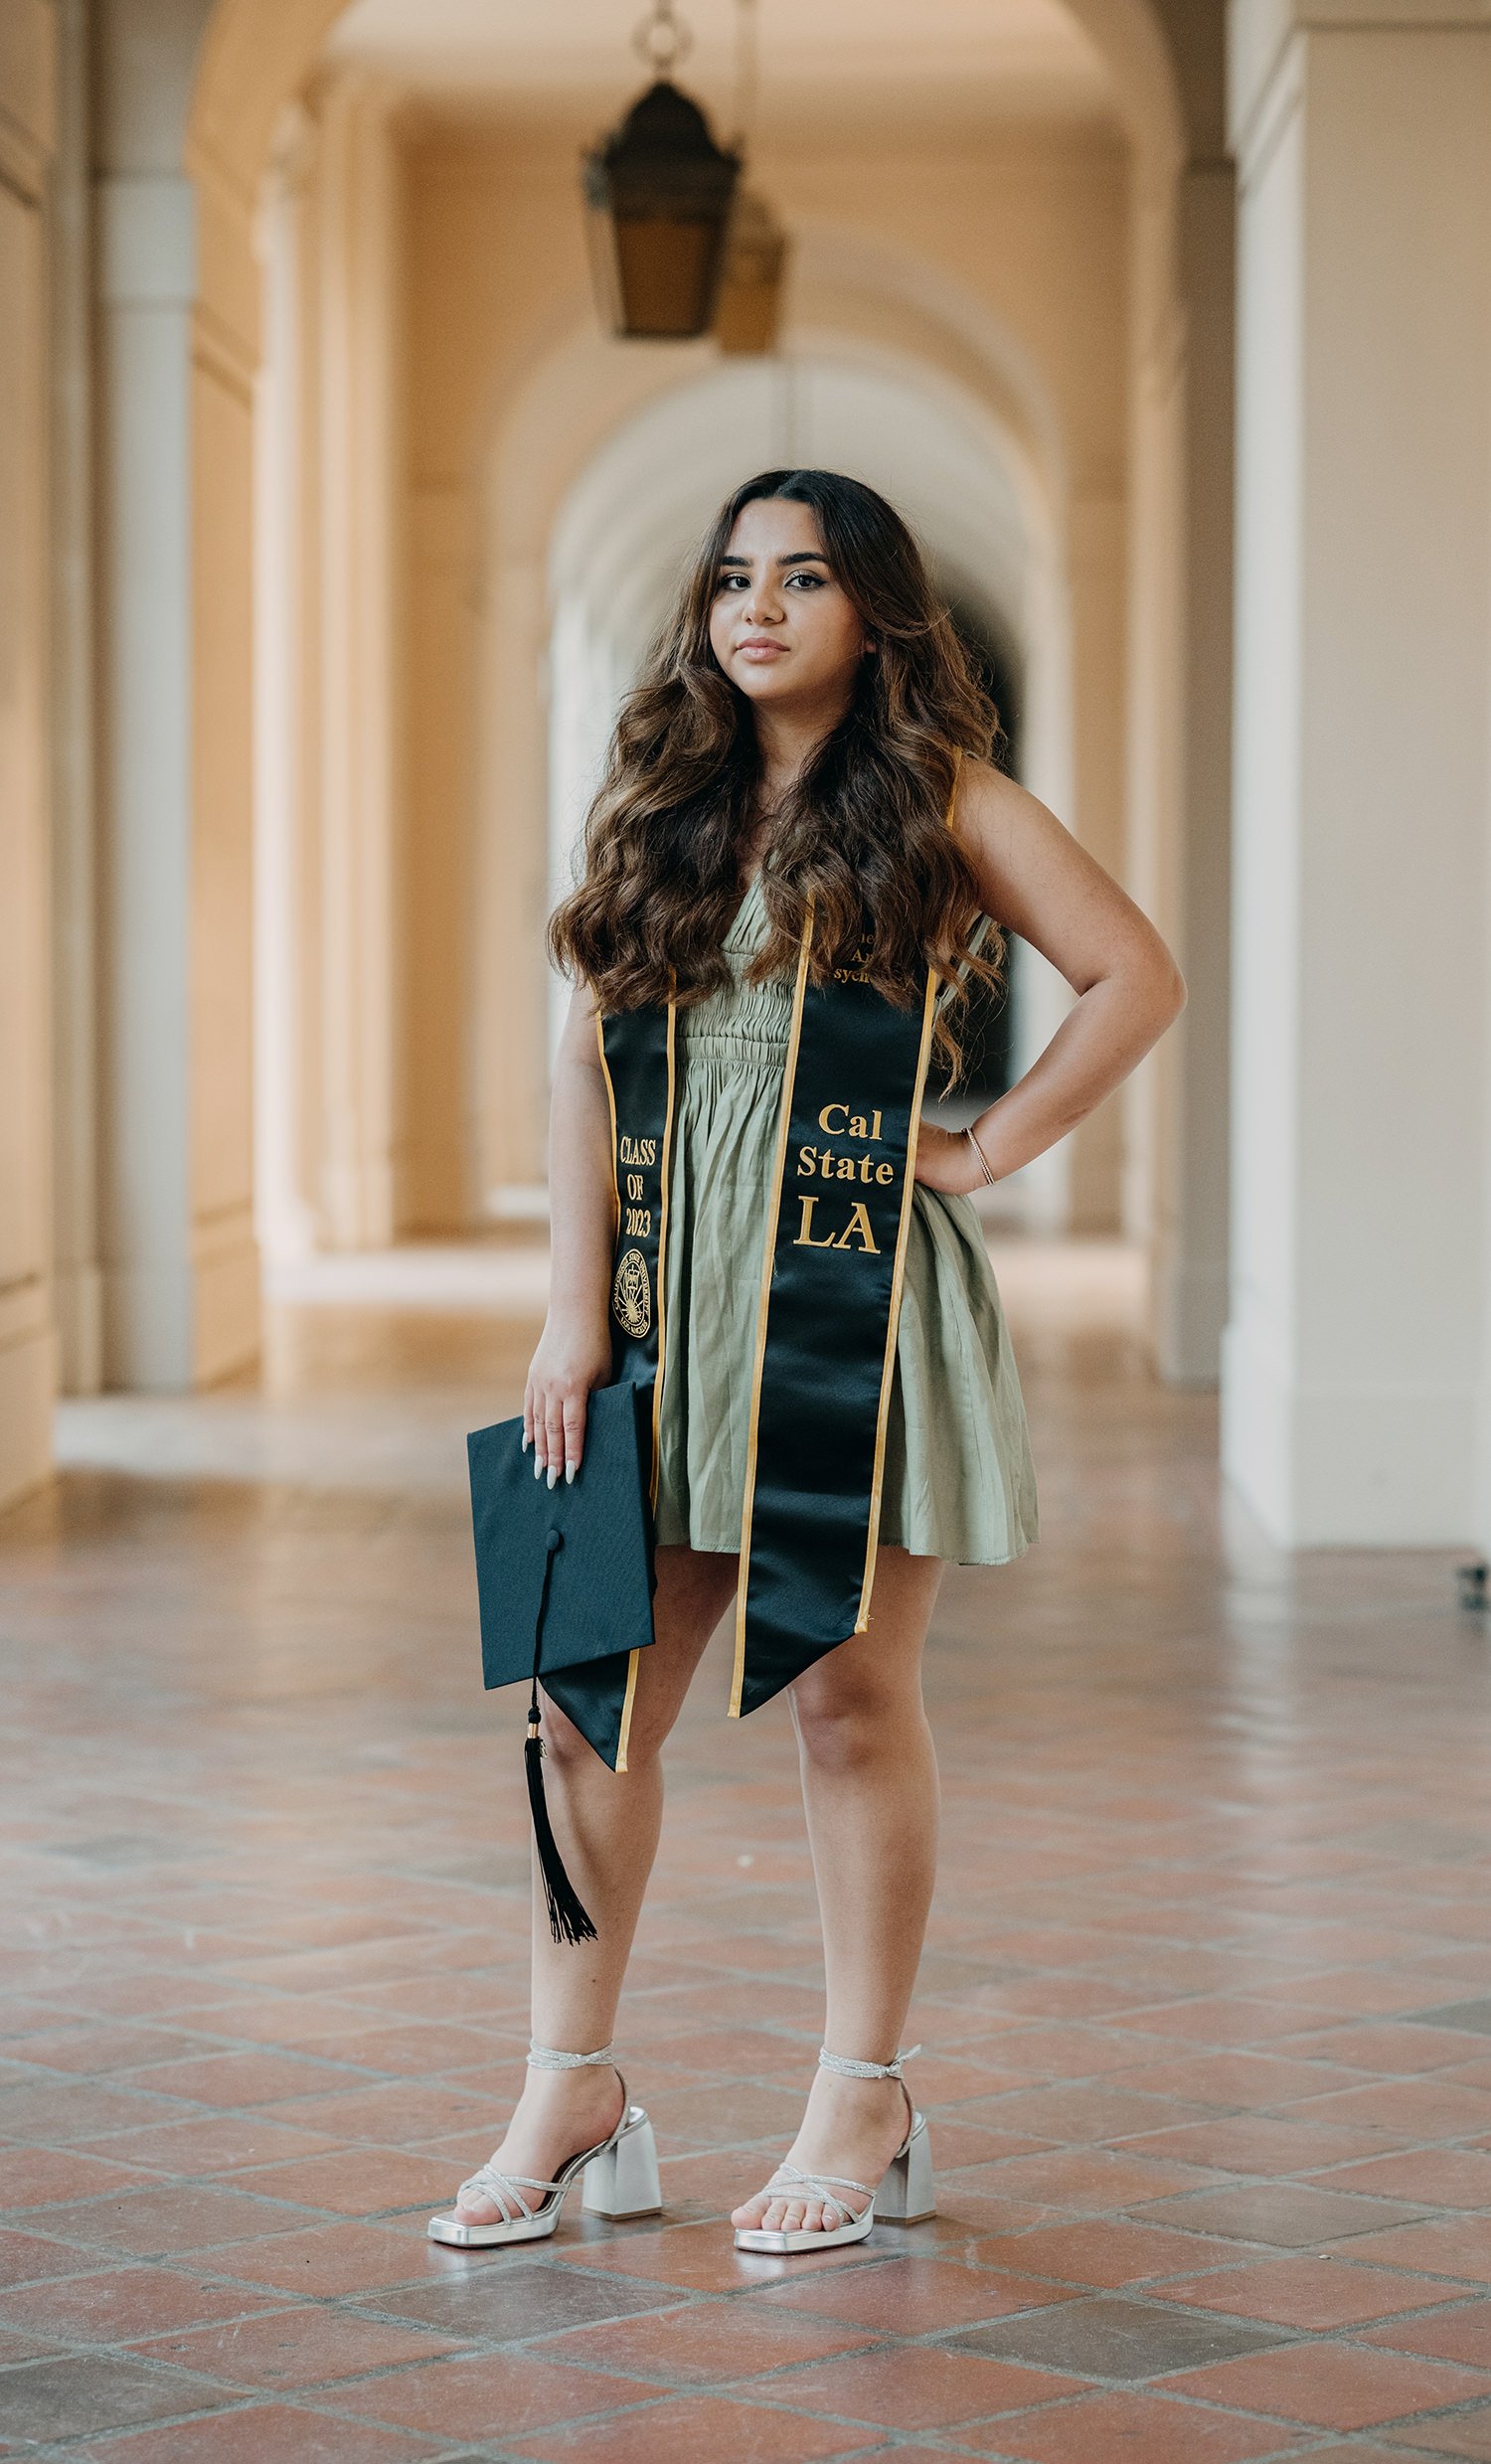 LosAngeles-Graduation-Portrait-Photographer-Pasadena-City-Hall-5.jpg